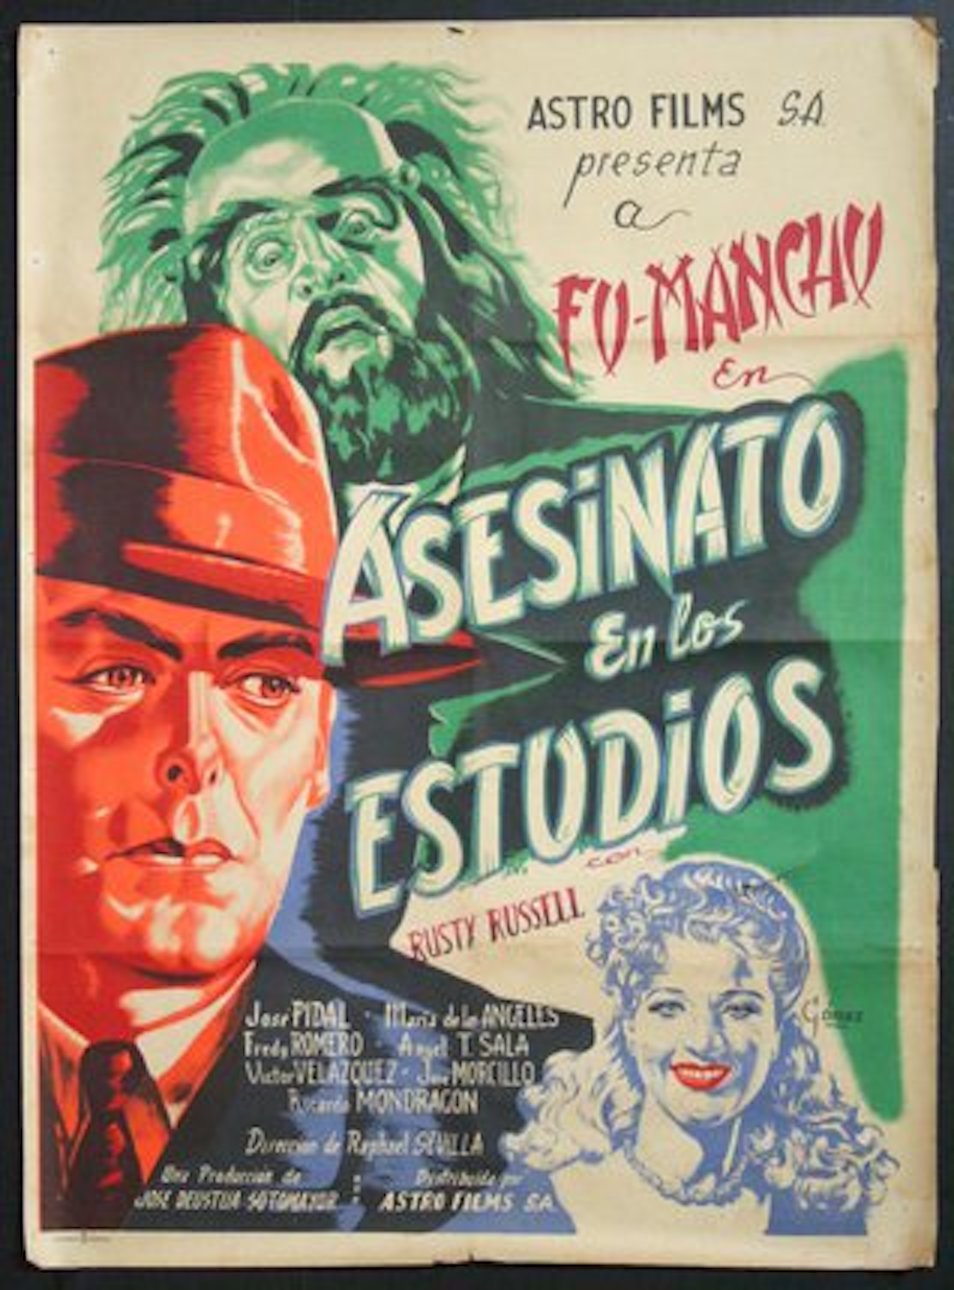 affiche du film Asesinato en los estudios